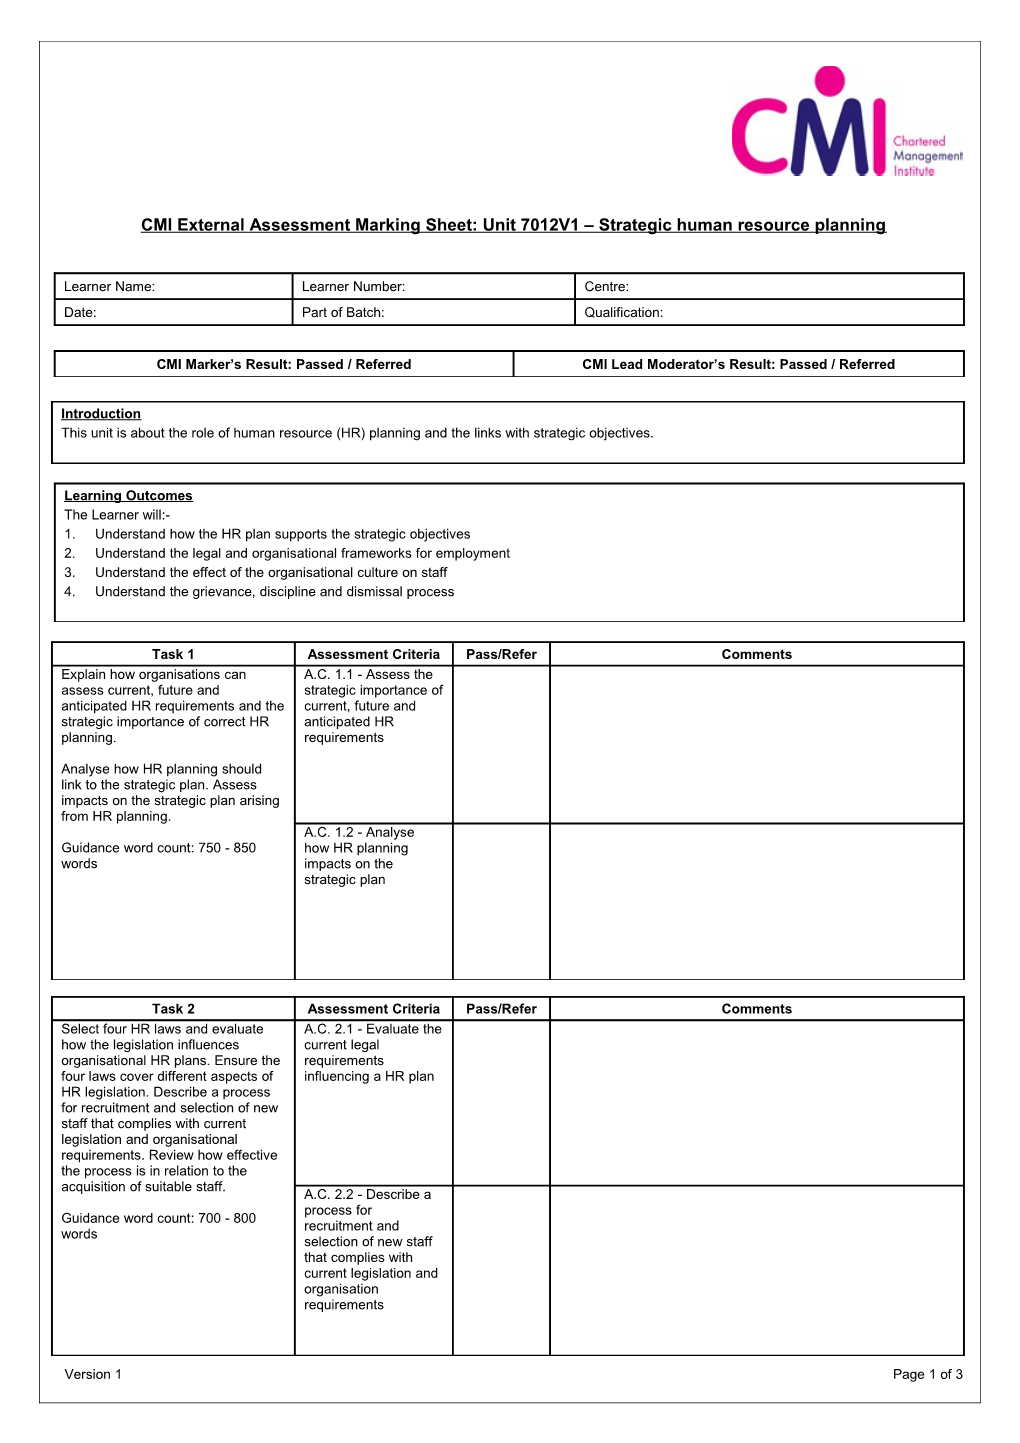 CMI External Assessment Marking Sheet:Unit 7012V1 Strategic Human Resource Planning